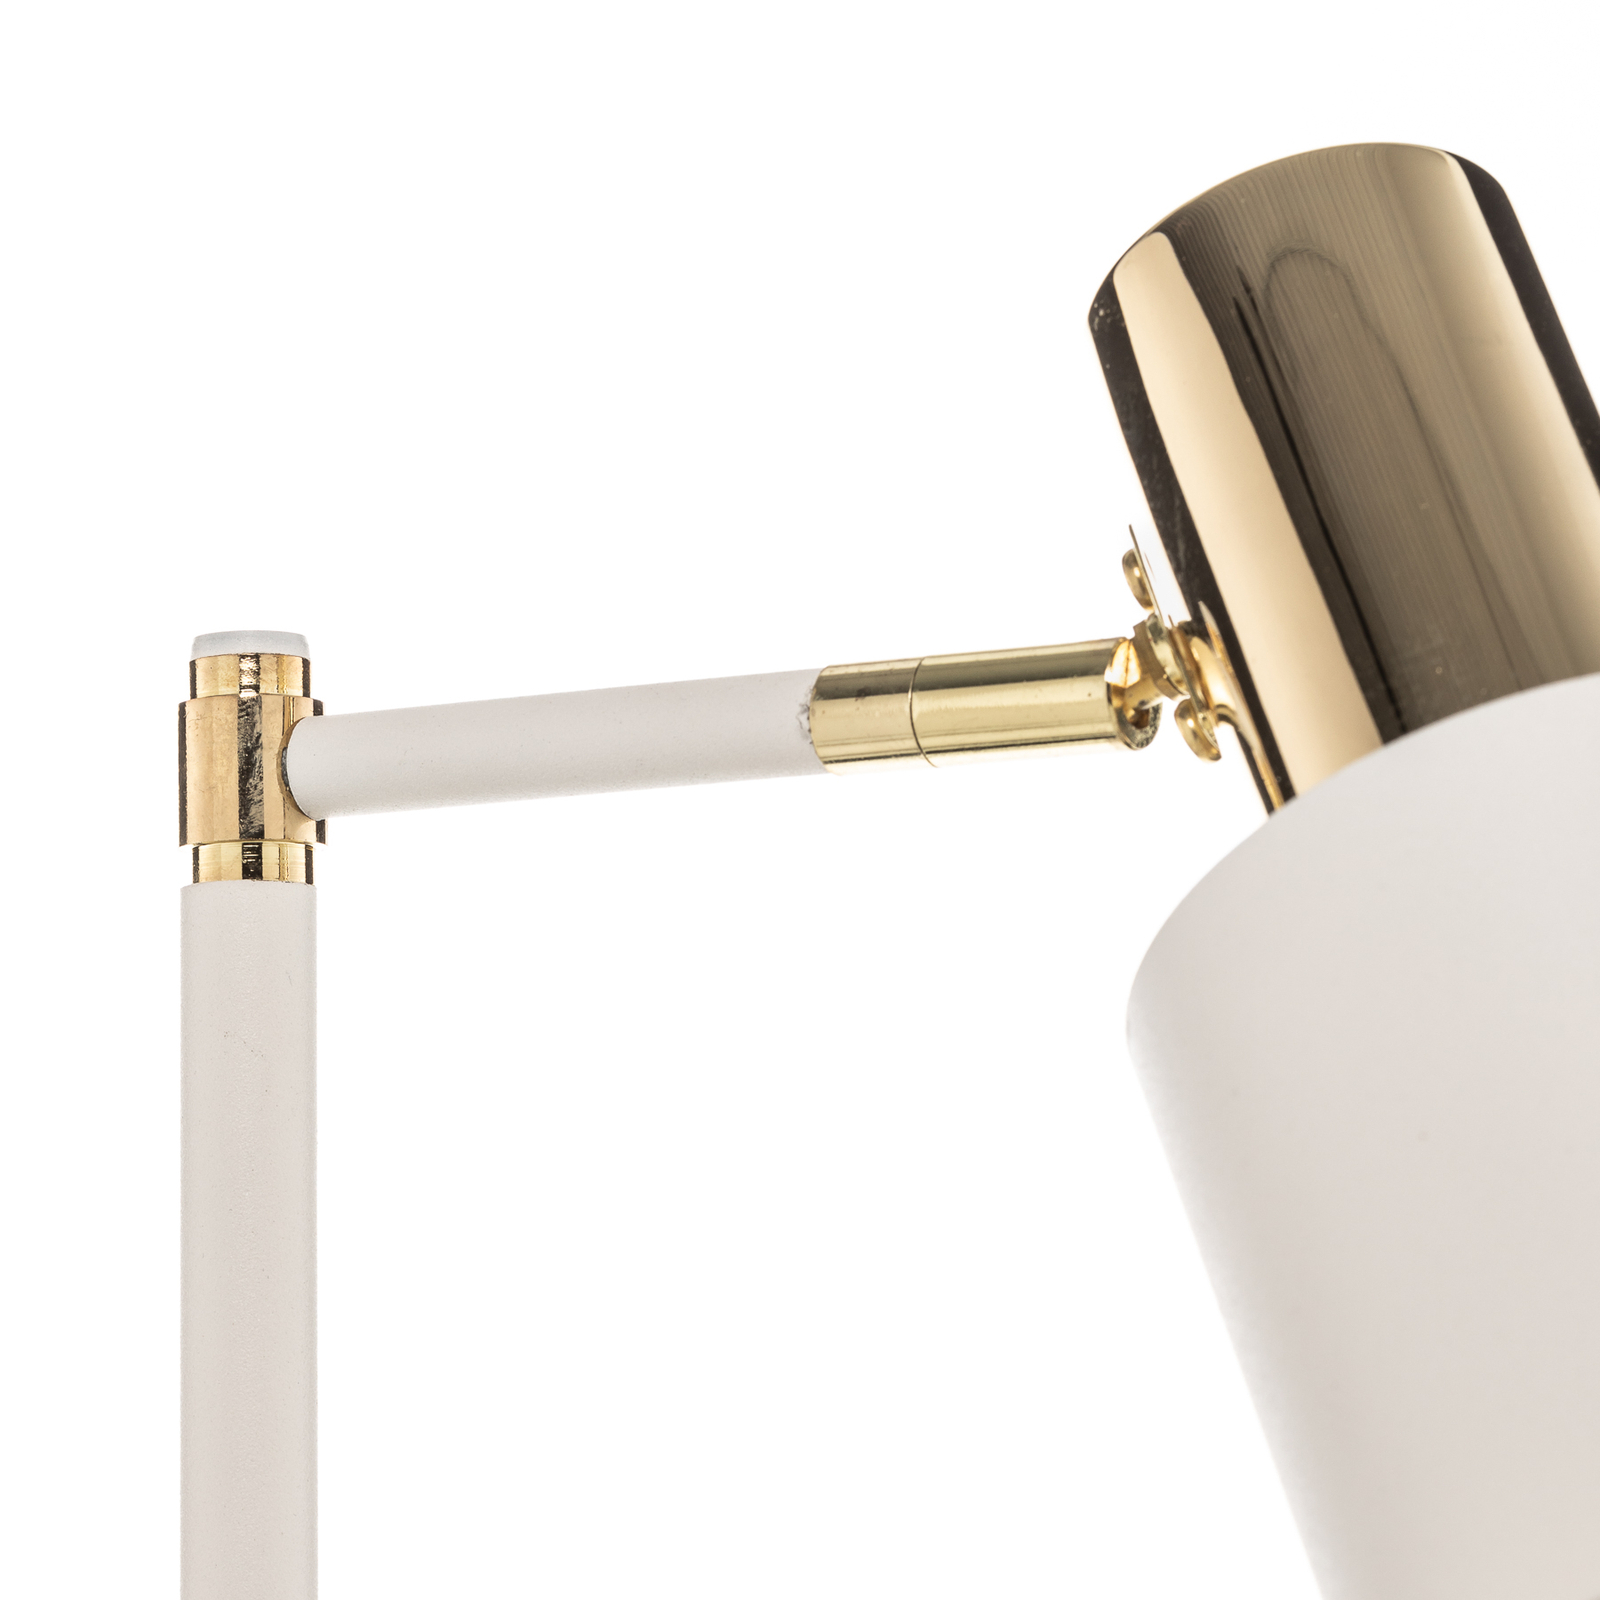 Destin floor lamp, adjustable white/brass